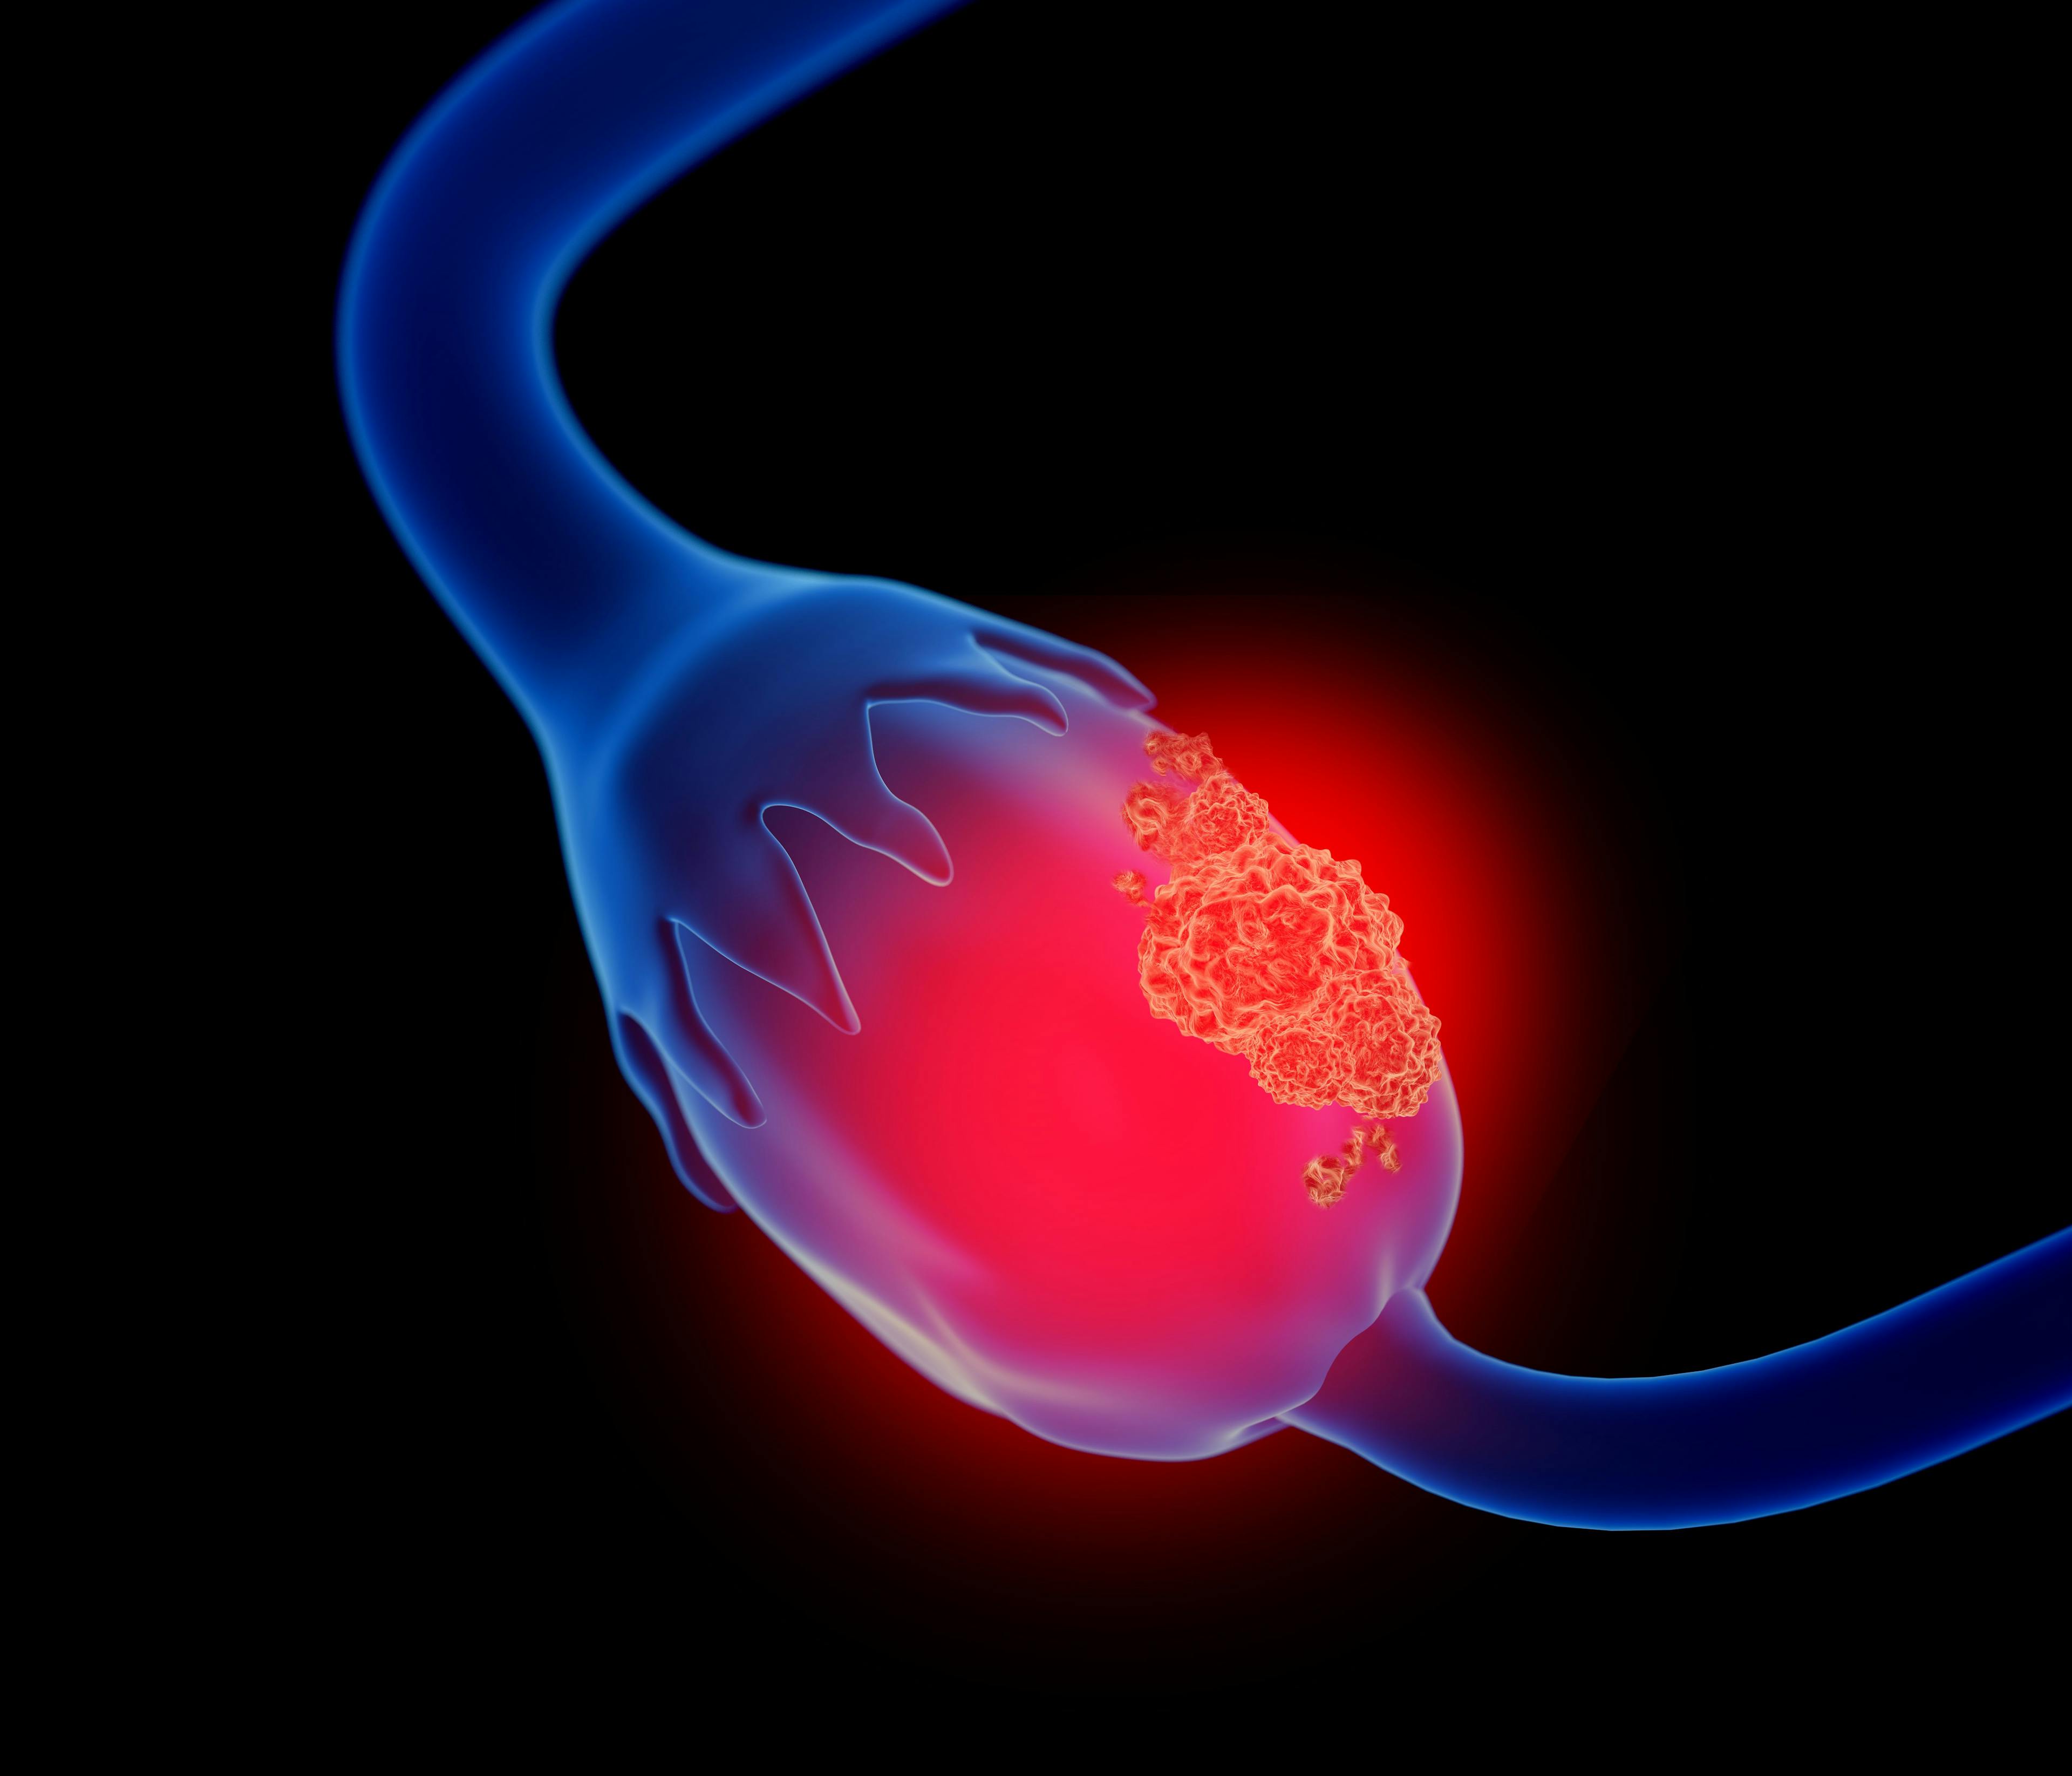 3d illustration of ovarian cancer | Image credit: Lars Neumann – stock.adobe.com